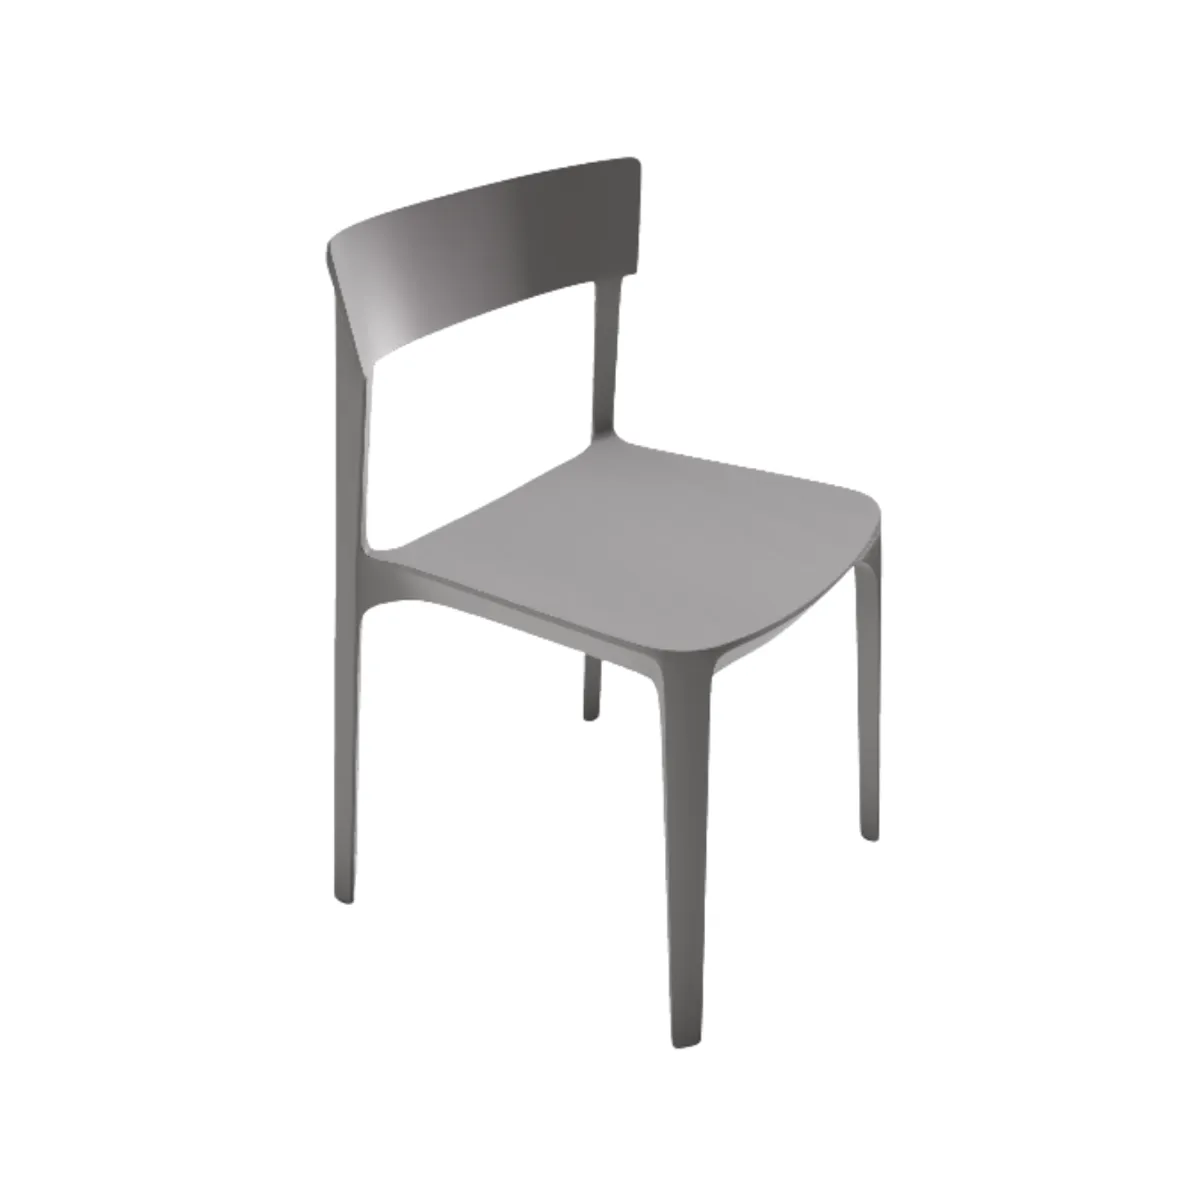 Skin side chair - Ex Display